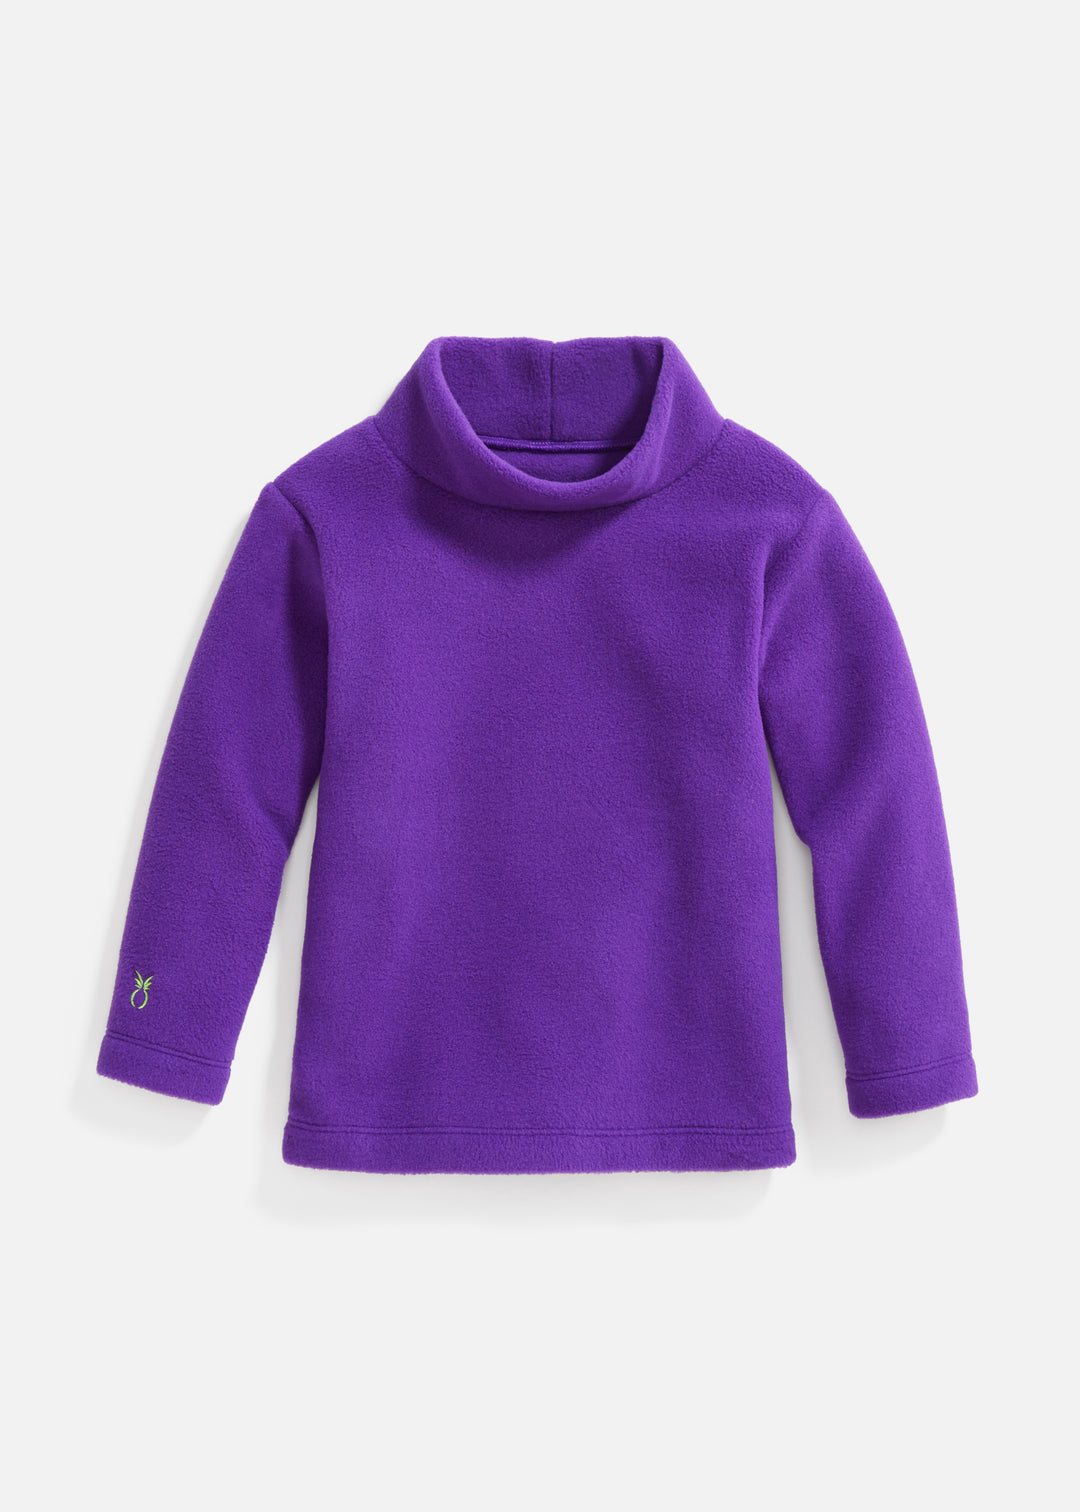 Toddler Turtleneck in Vello Fleece (Purple)